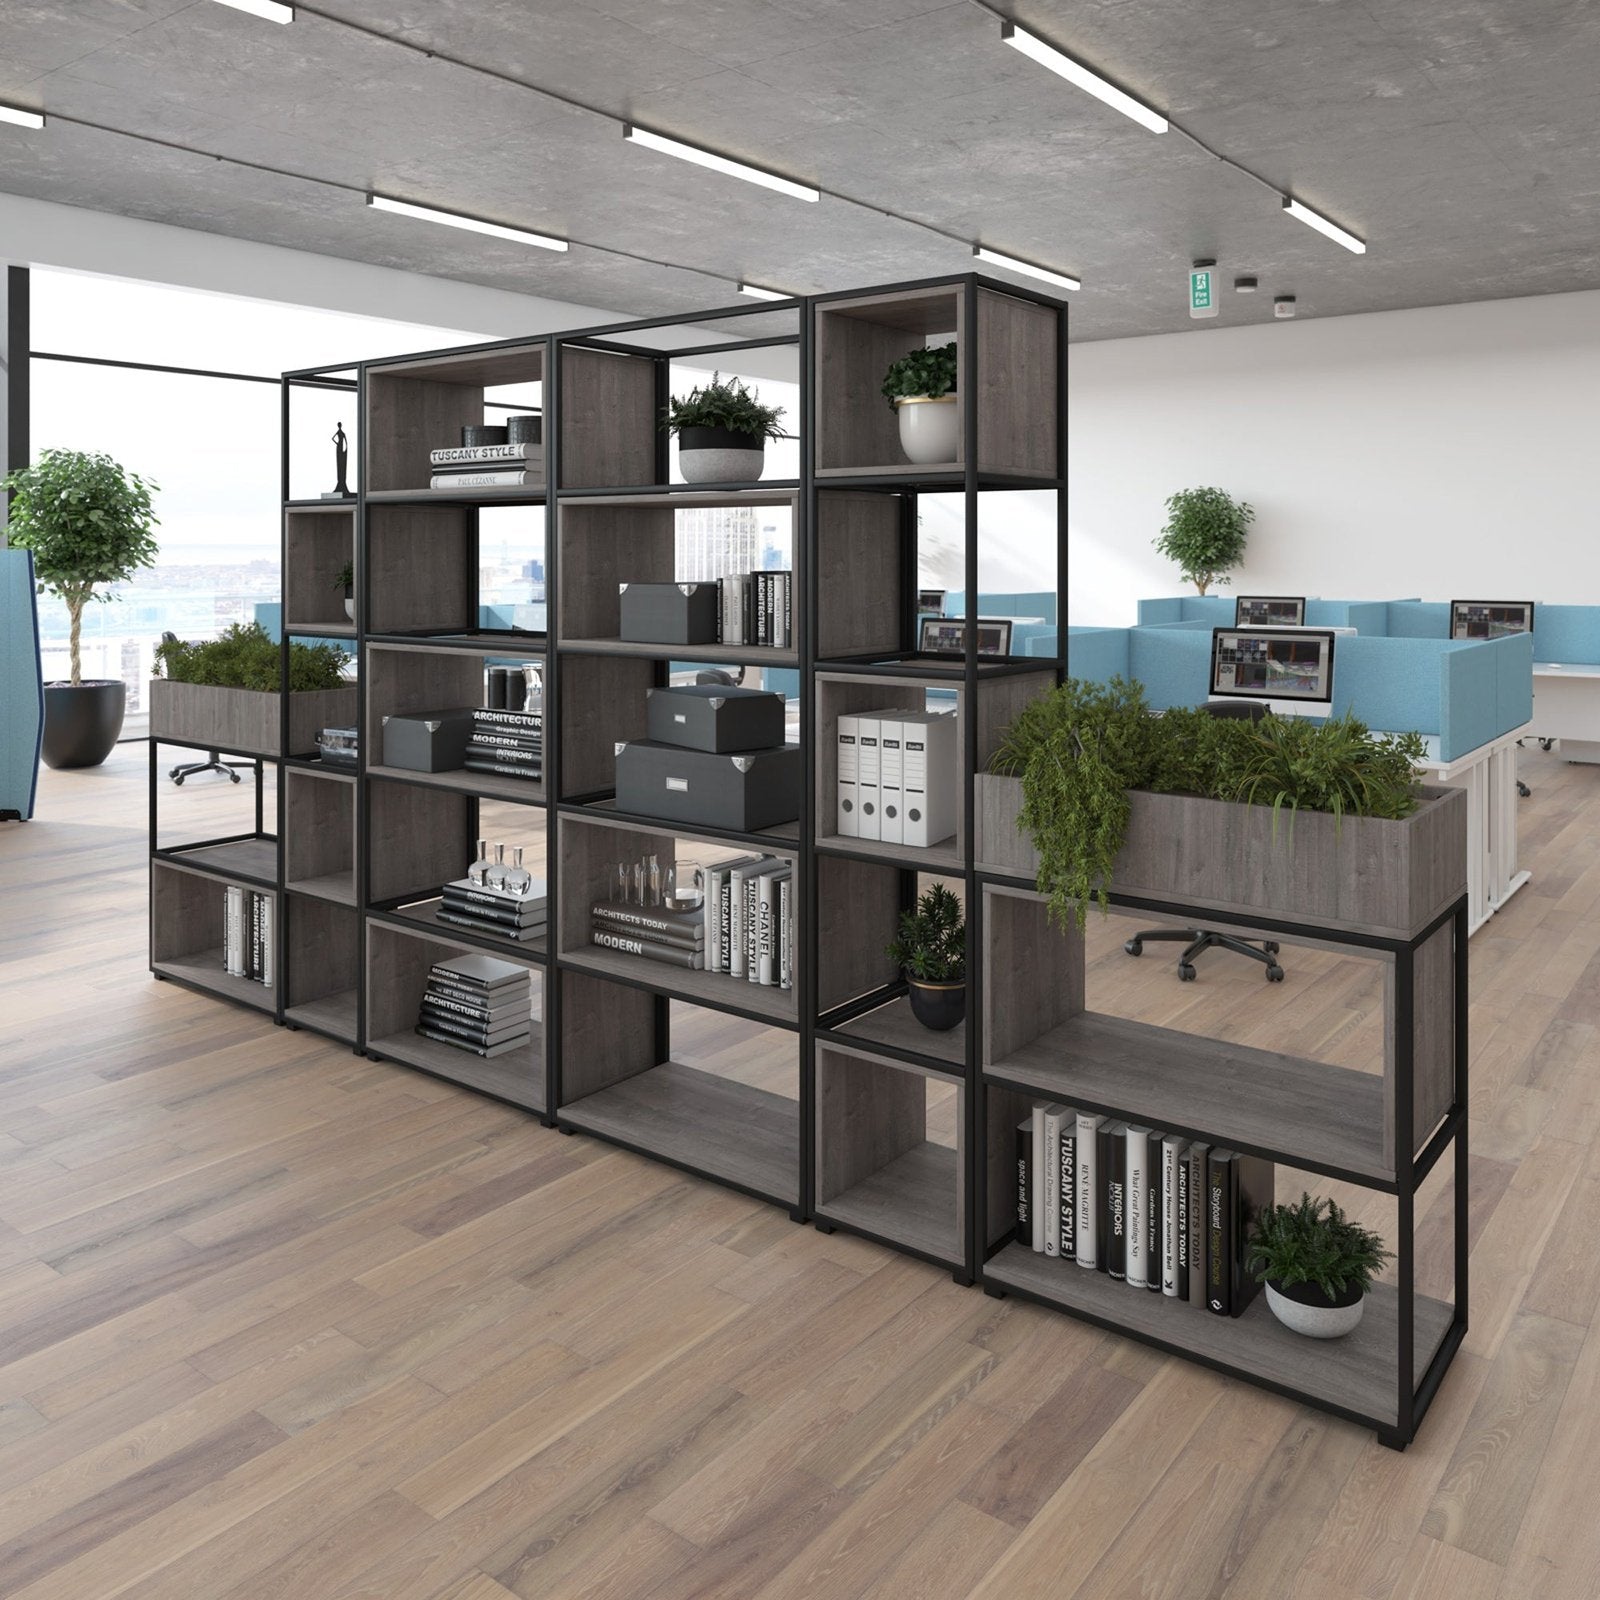 Flux modular storage wooden top shelf - Office Products Online